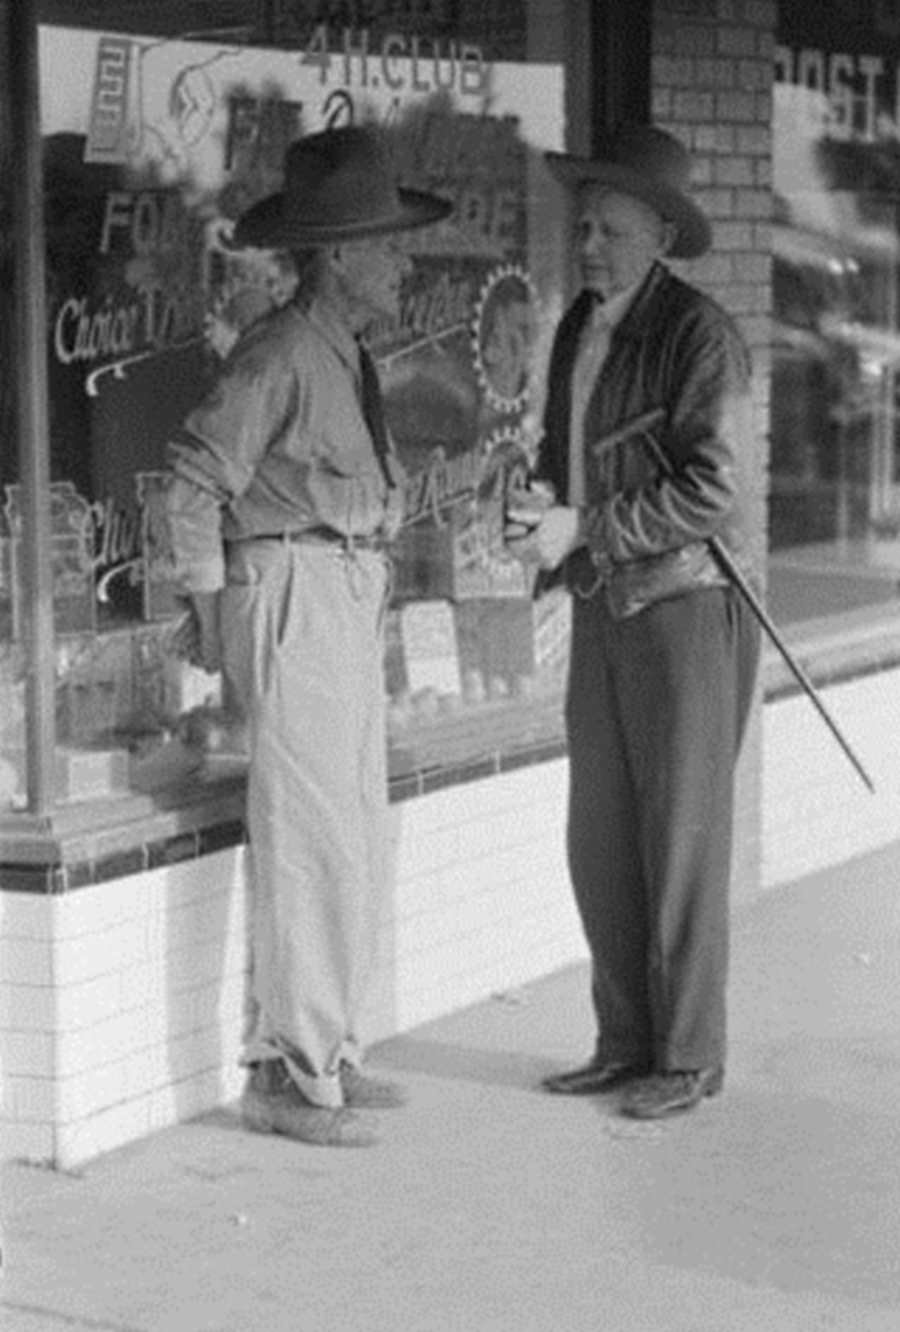 Old Men talking in Crystal City in 1939